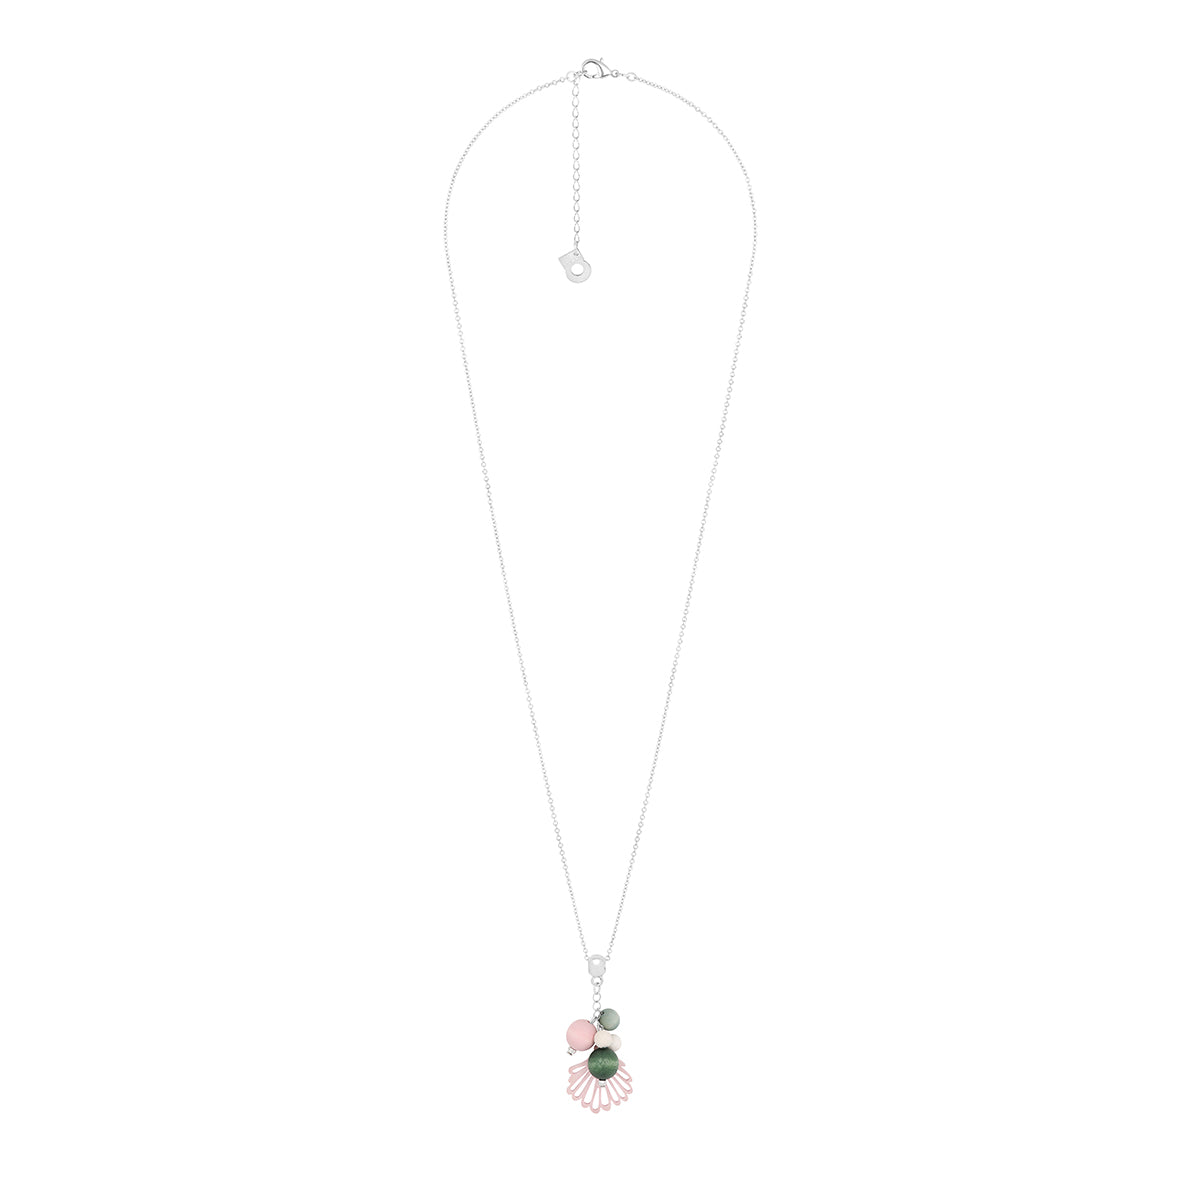 Simpukka pendant, green and pink